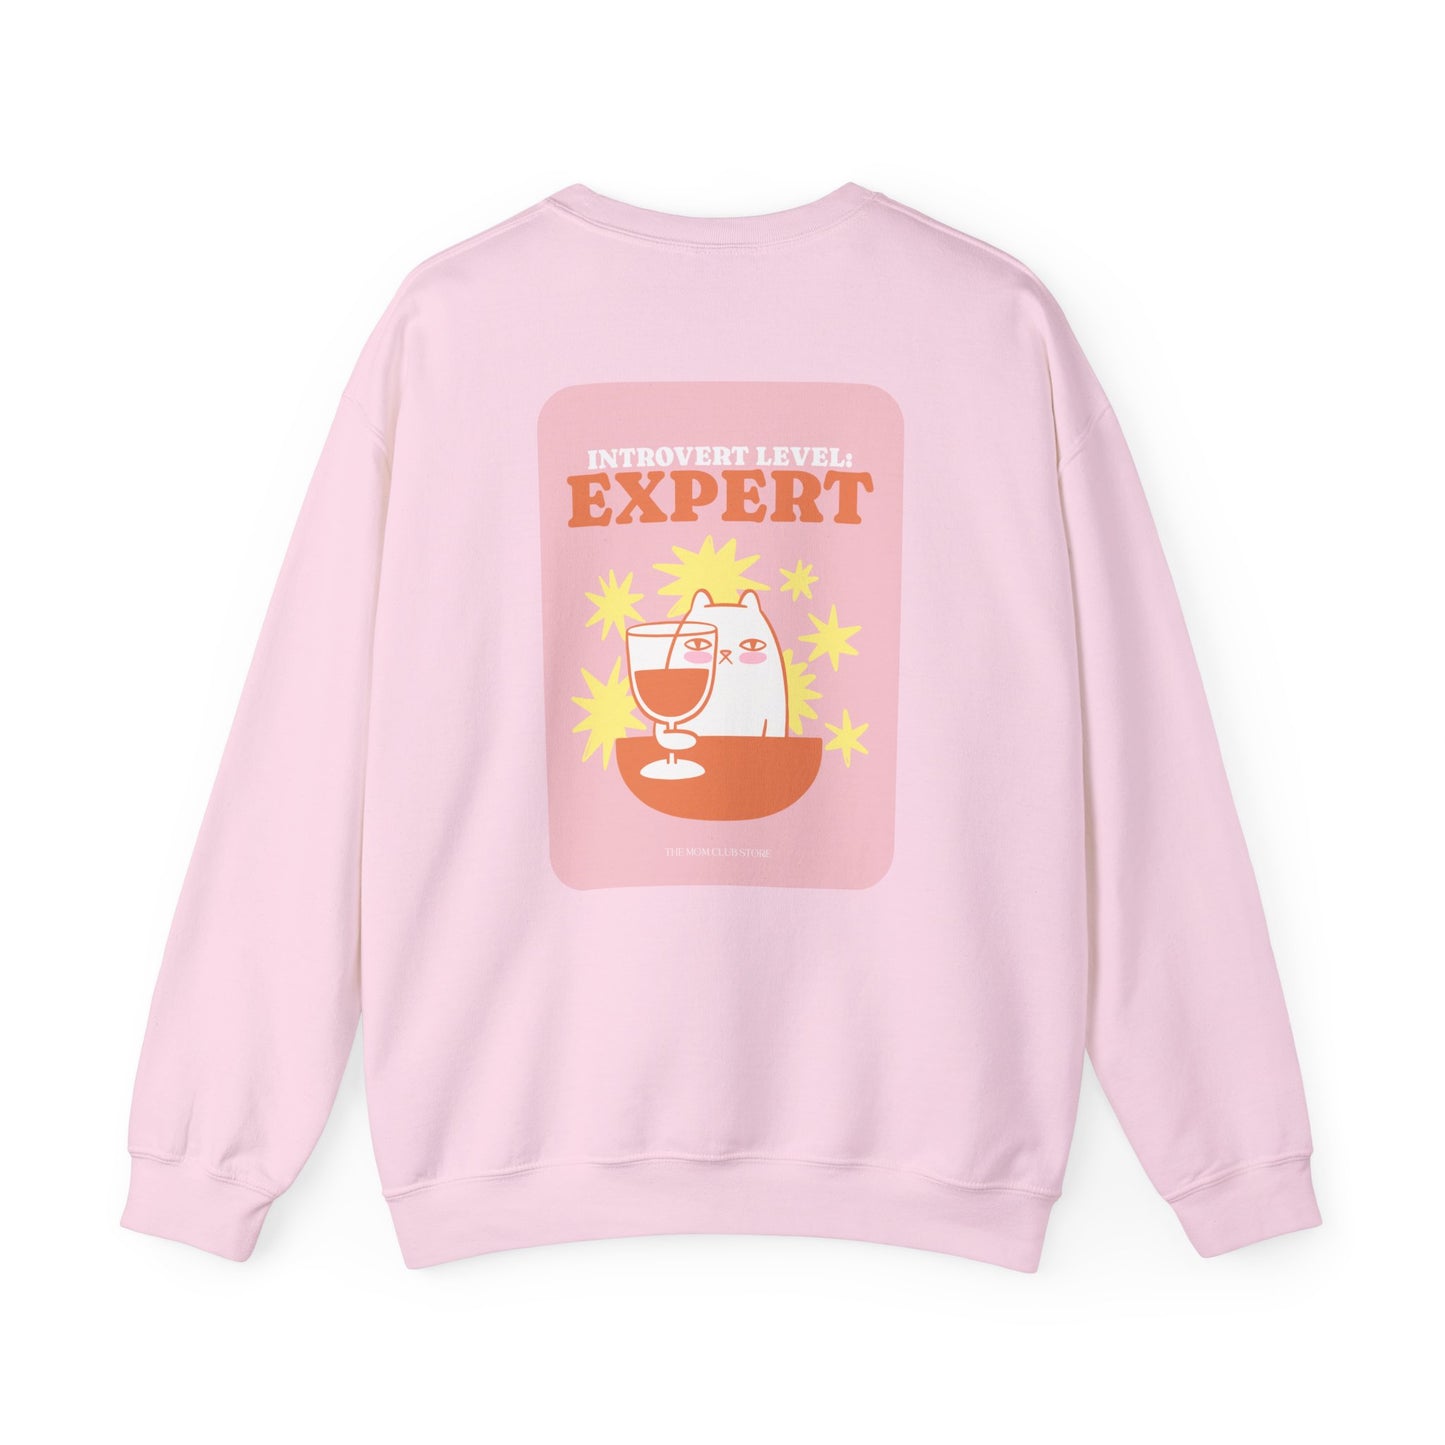 Crewneck sweatshirt -introvert level EXPERT- for adults